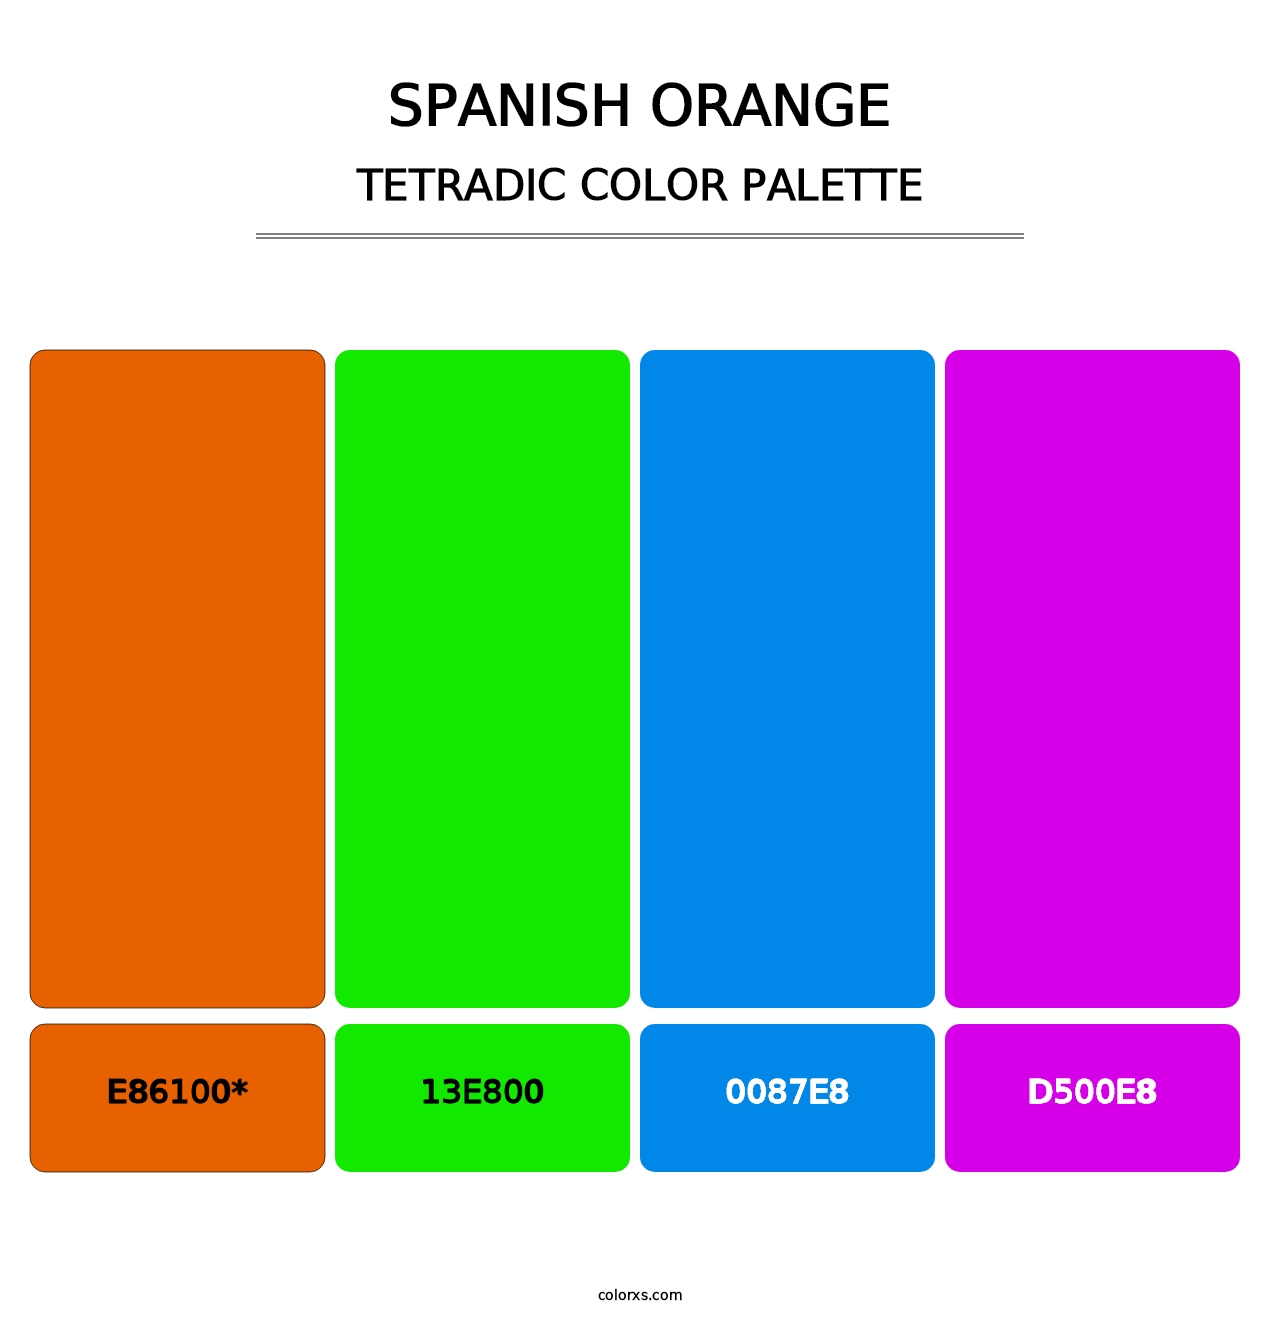 Spanish Orange - Tetradic Color Palette